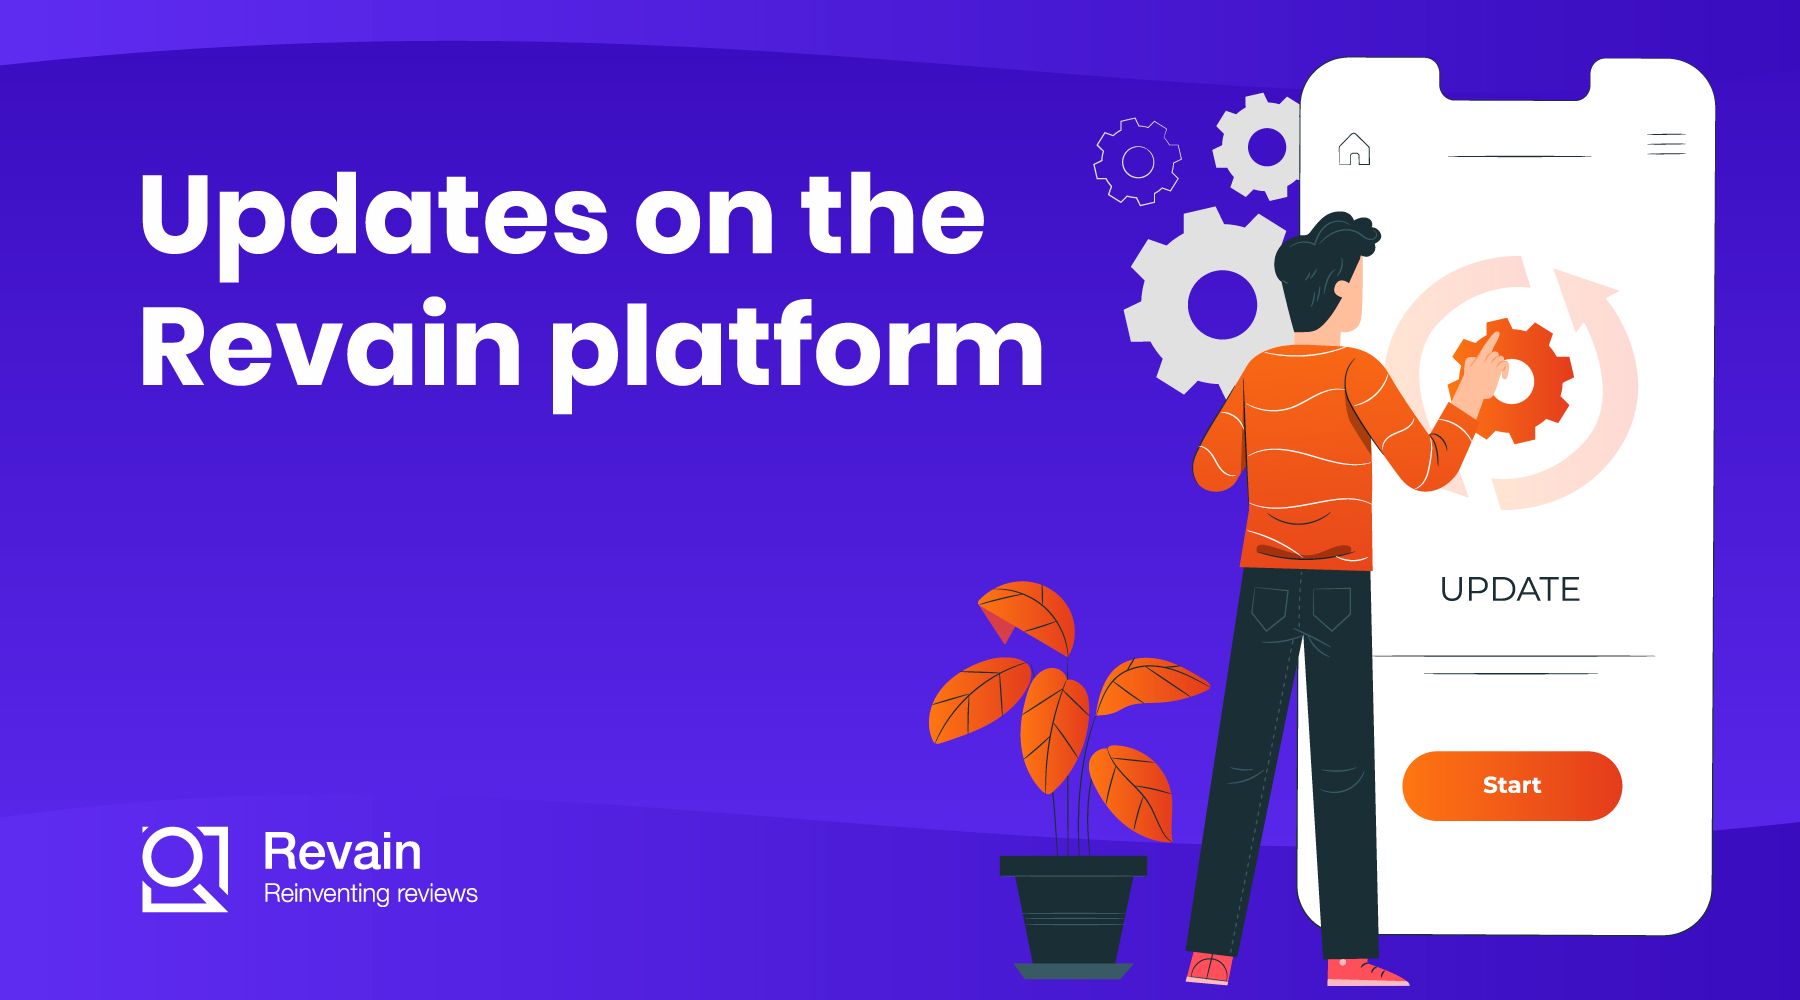 Article Updates on the Revain platform!